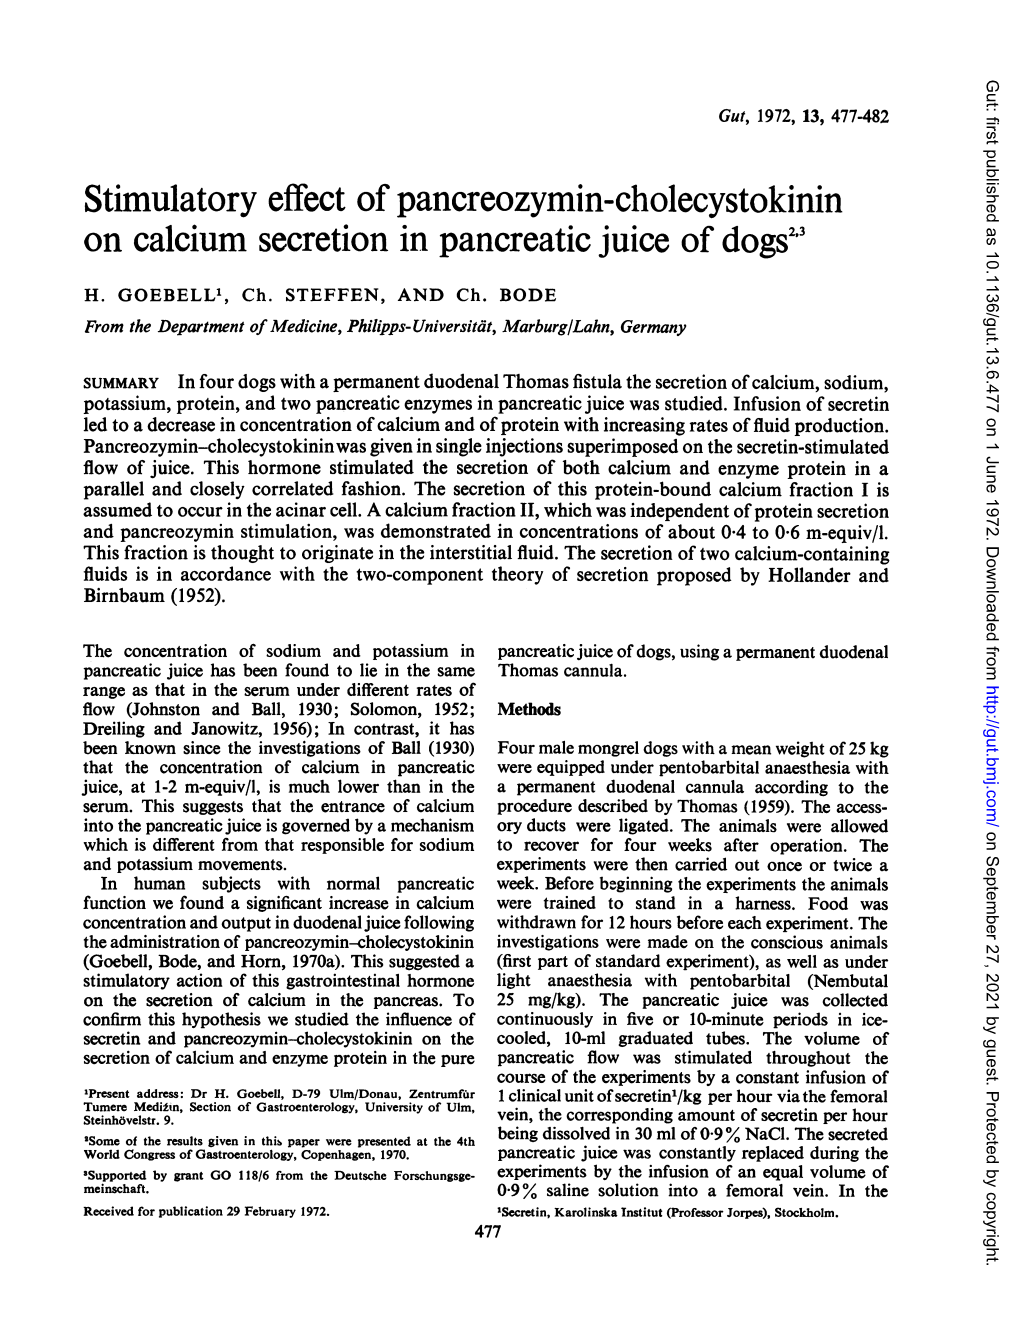 Stimulatory Effect Ofpancreozymin-Cholecystokinin on Calcium Secretion in Pancreatic Juice of Dogs 479